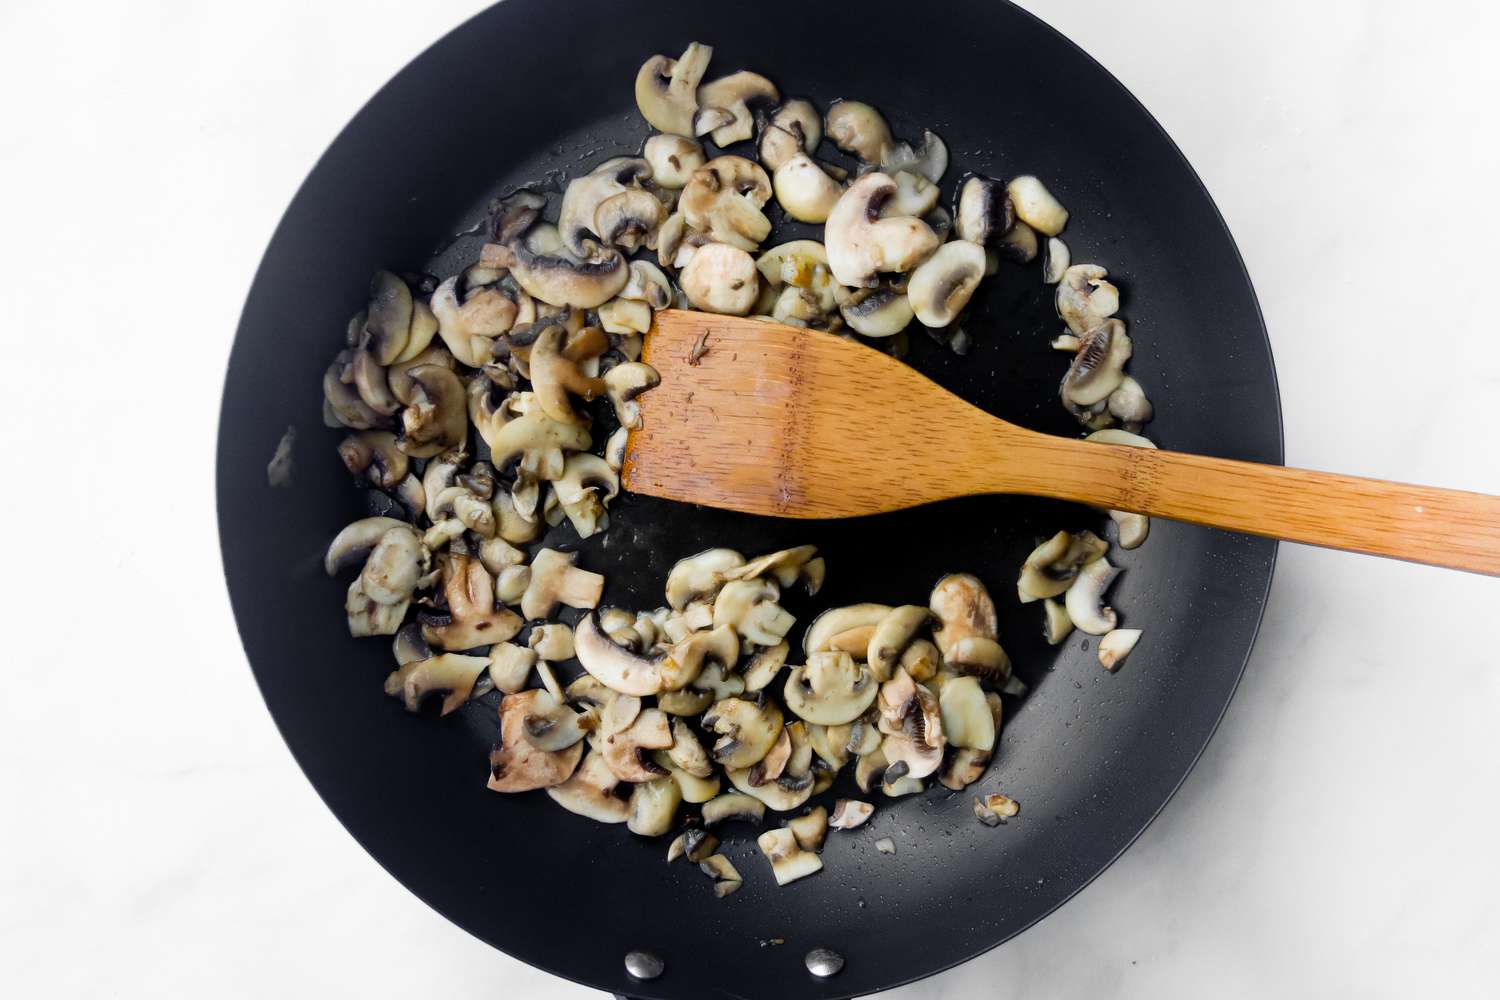 Cook mushrooms in a black skillet.